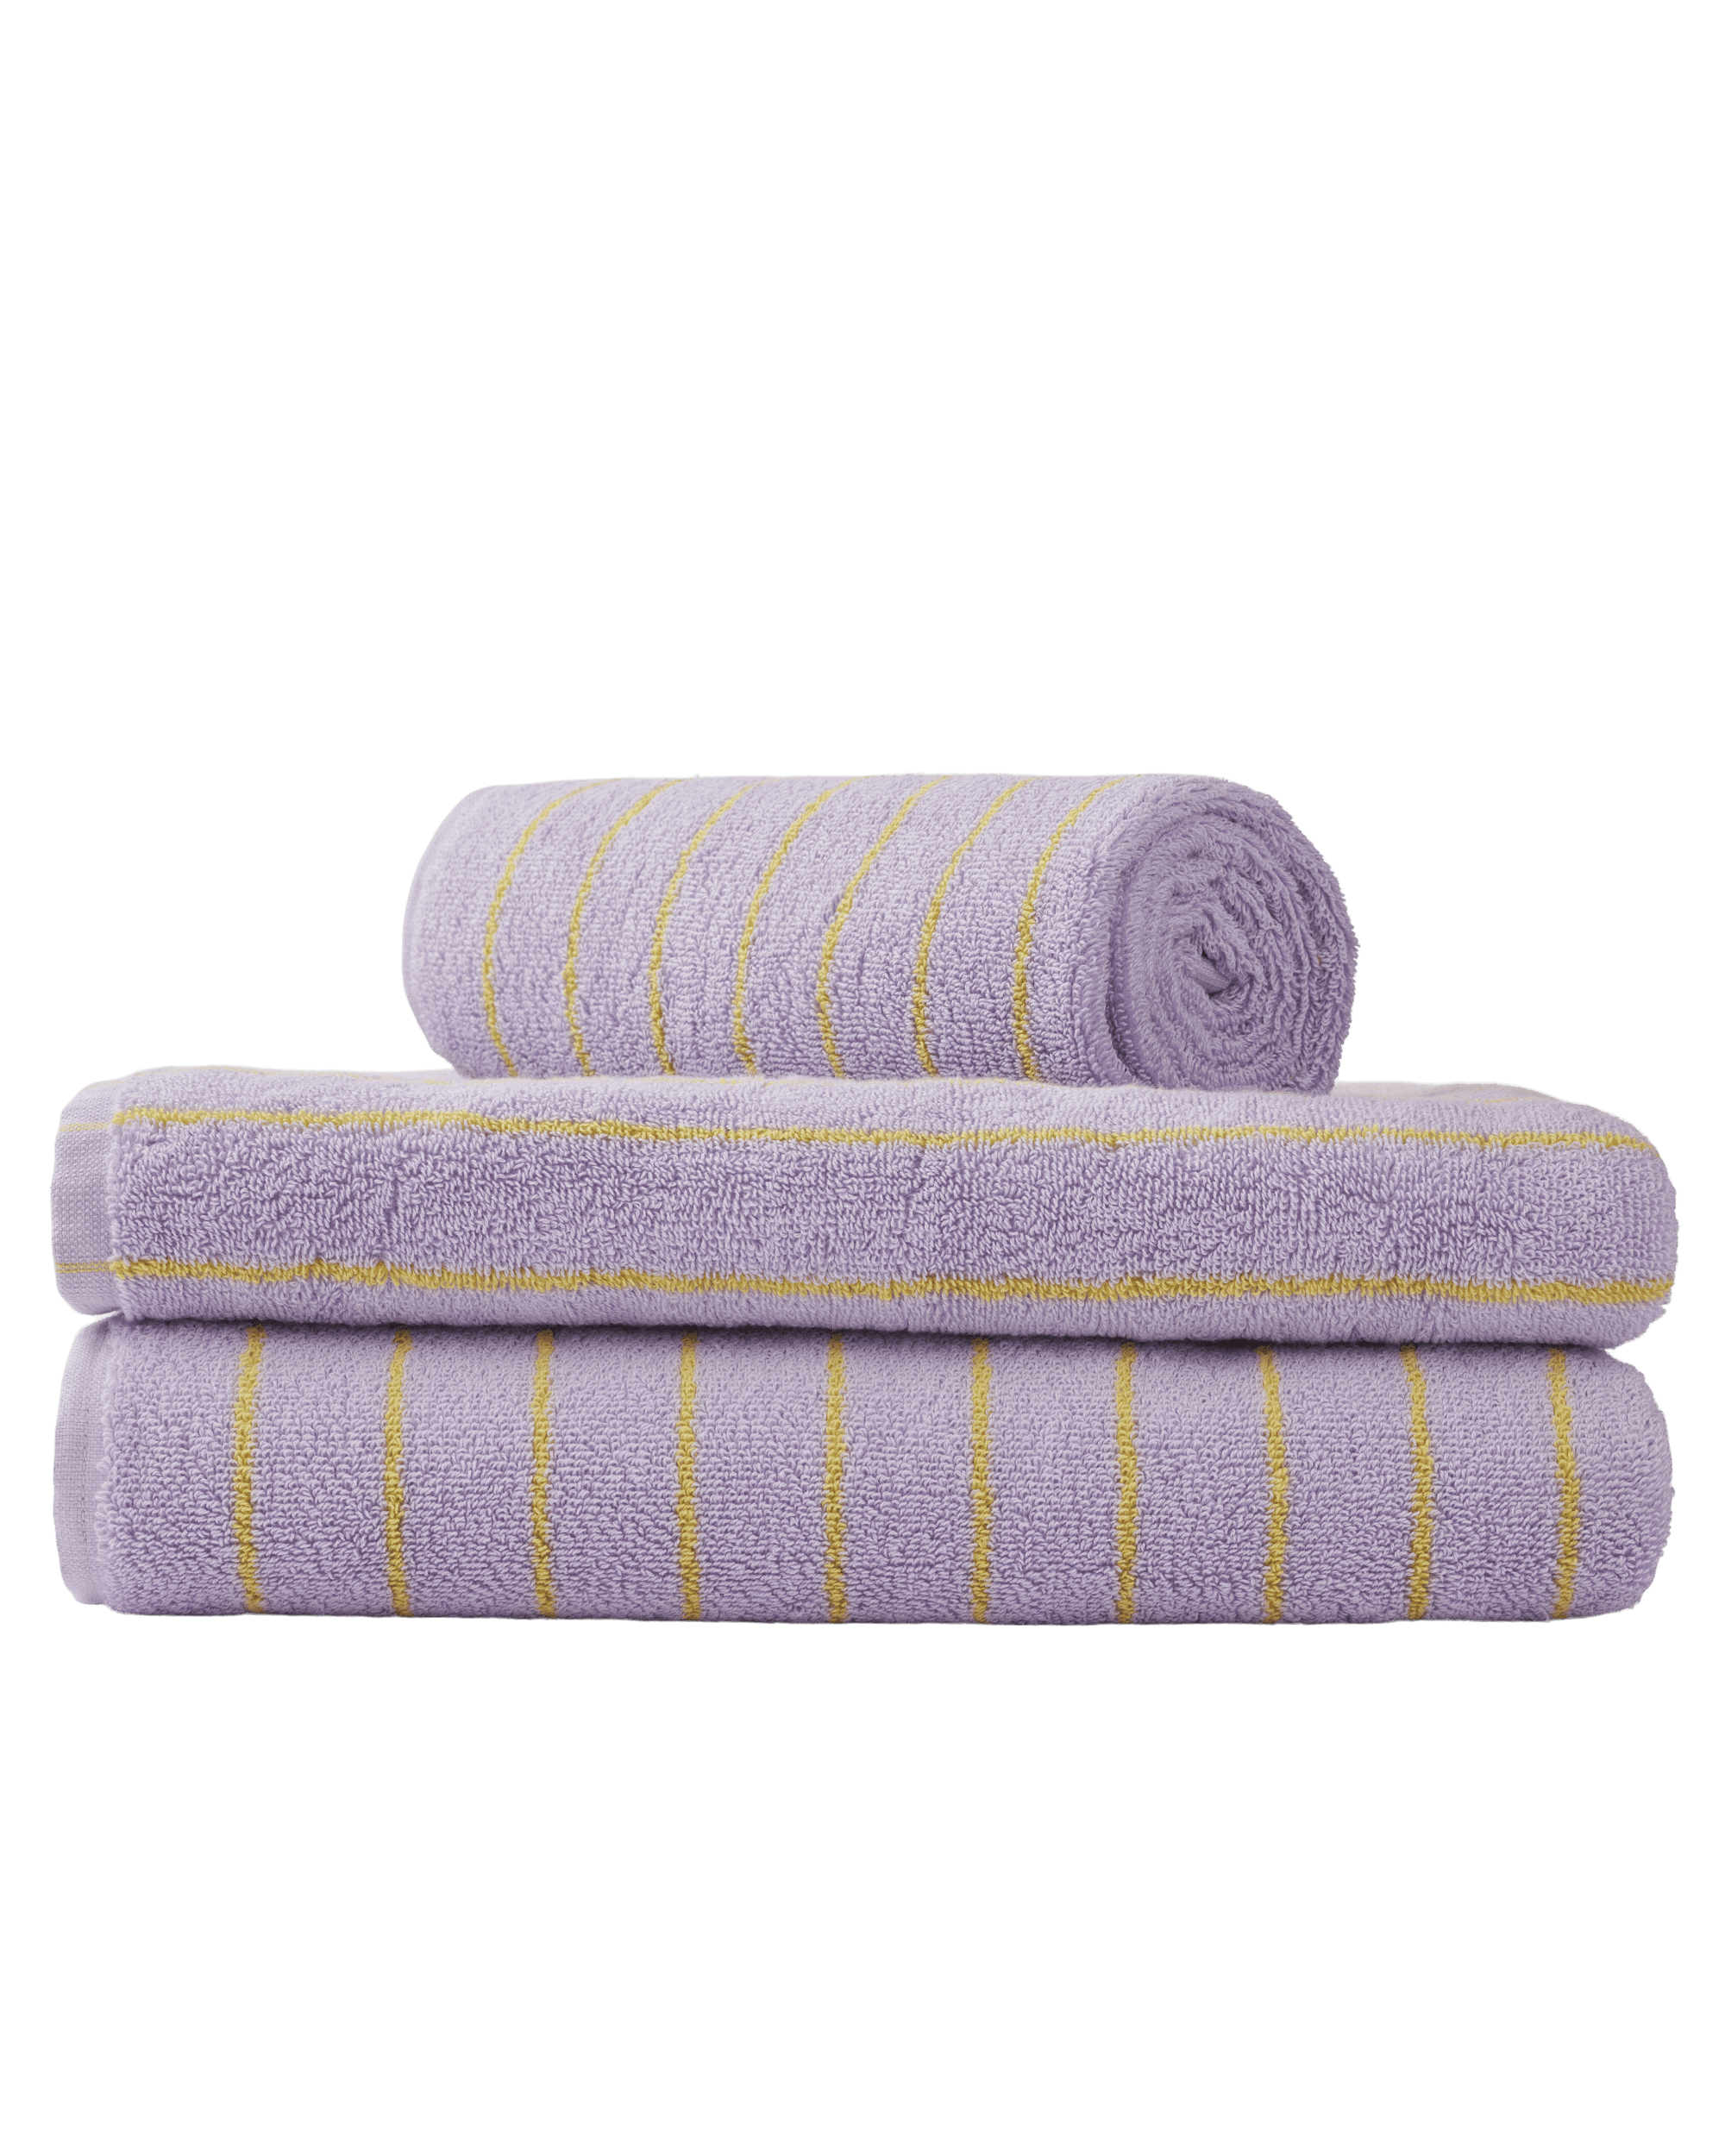 Bongusta, Product image, Naram håndklæder, lilac & neon yellow, 5 of 5}